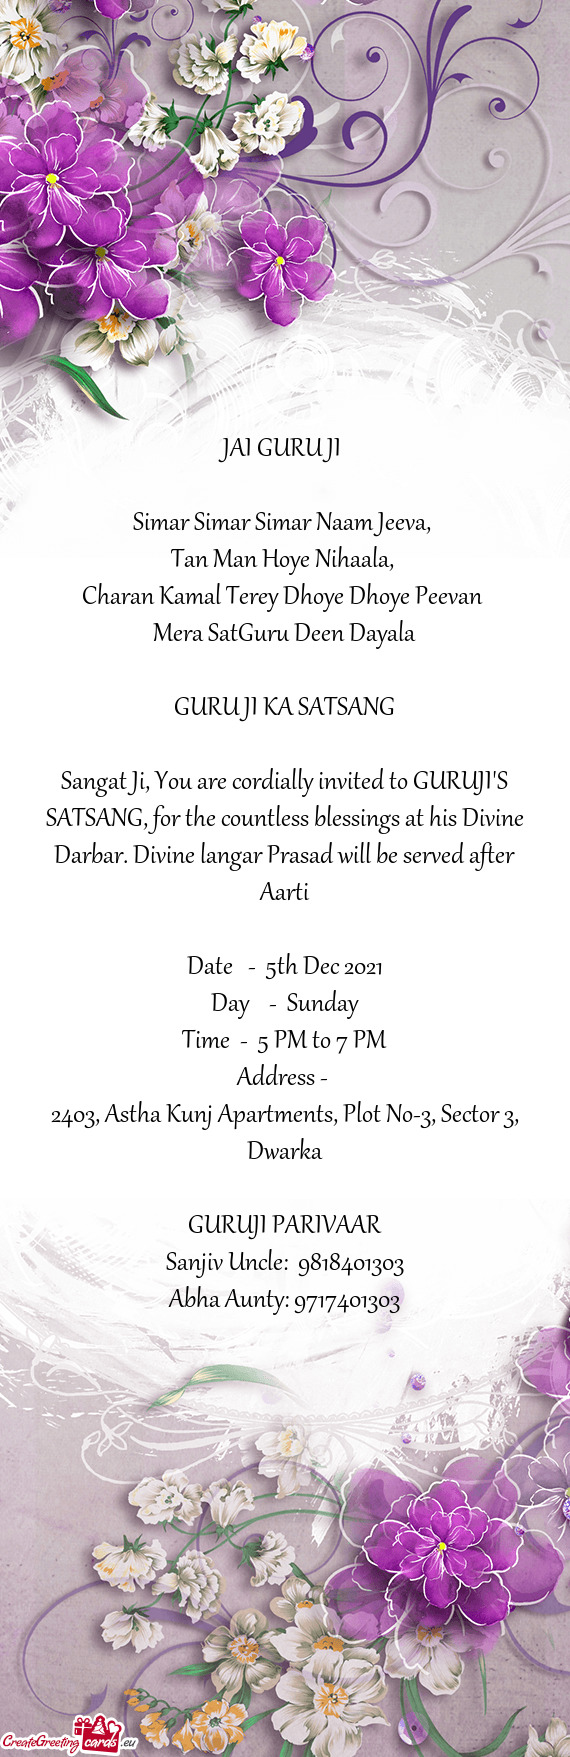 Darbar. Divine langar Prasad will be served after Aarti